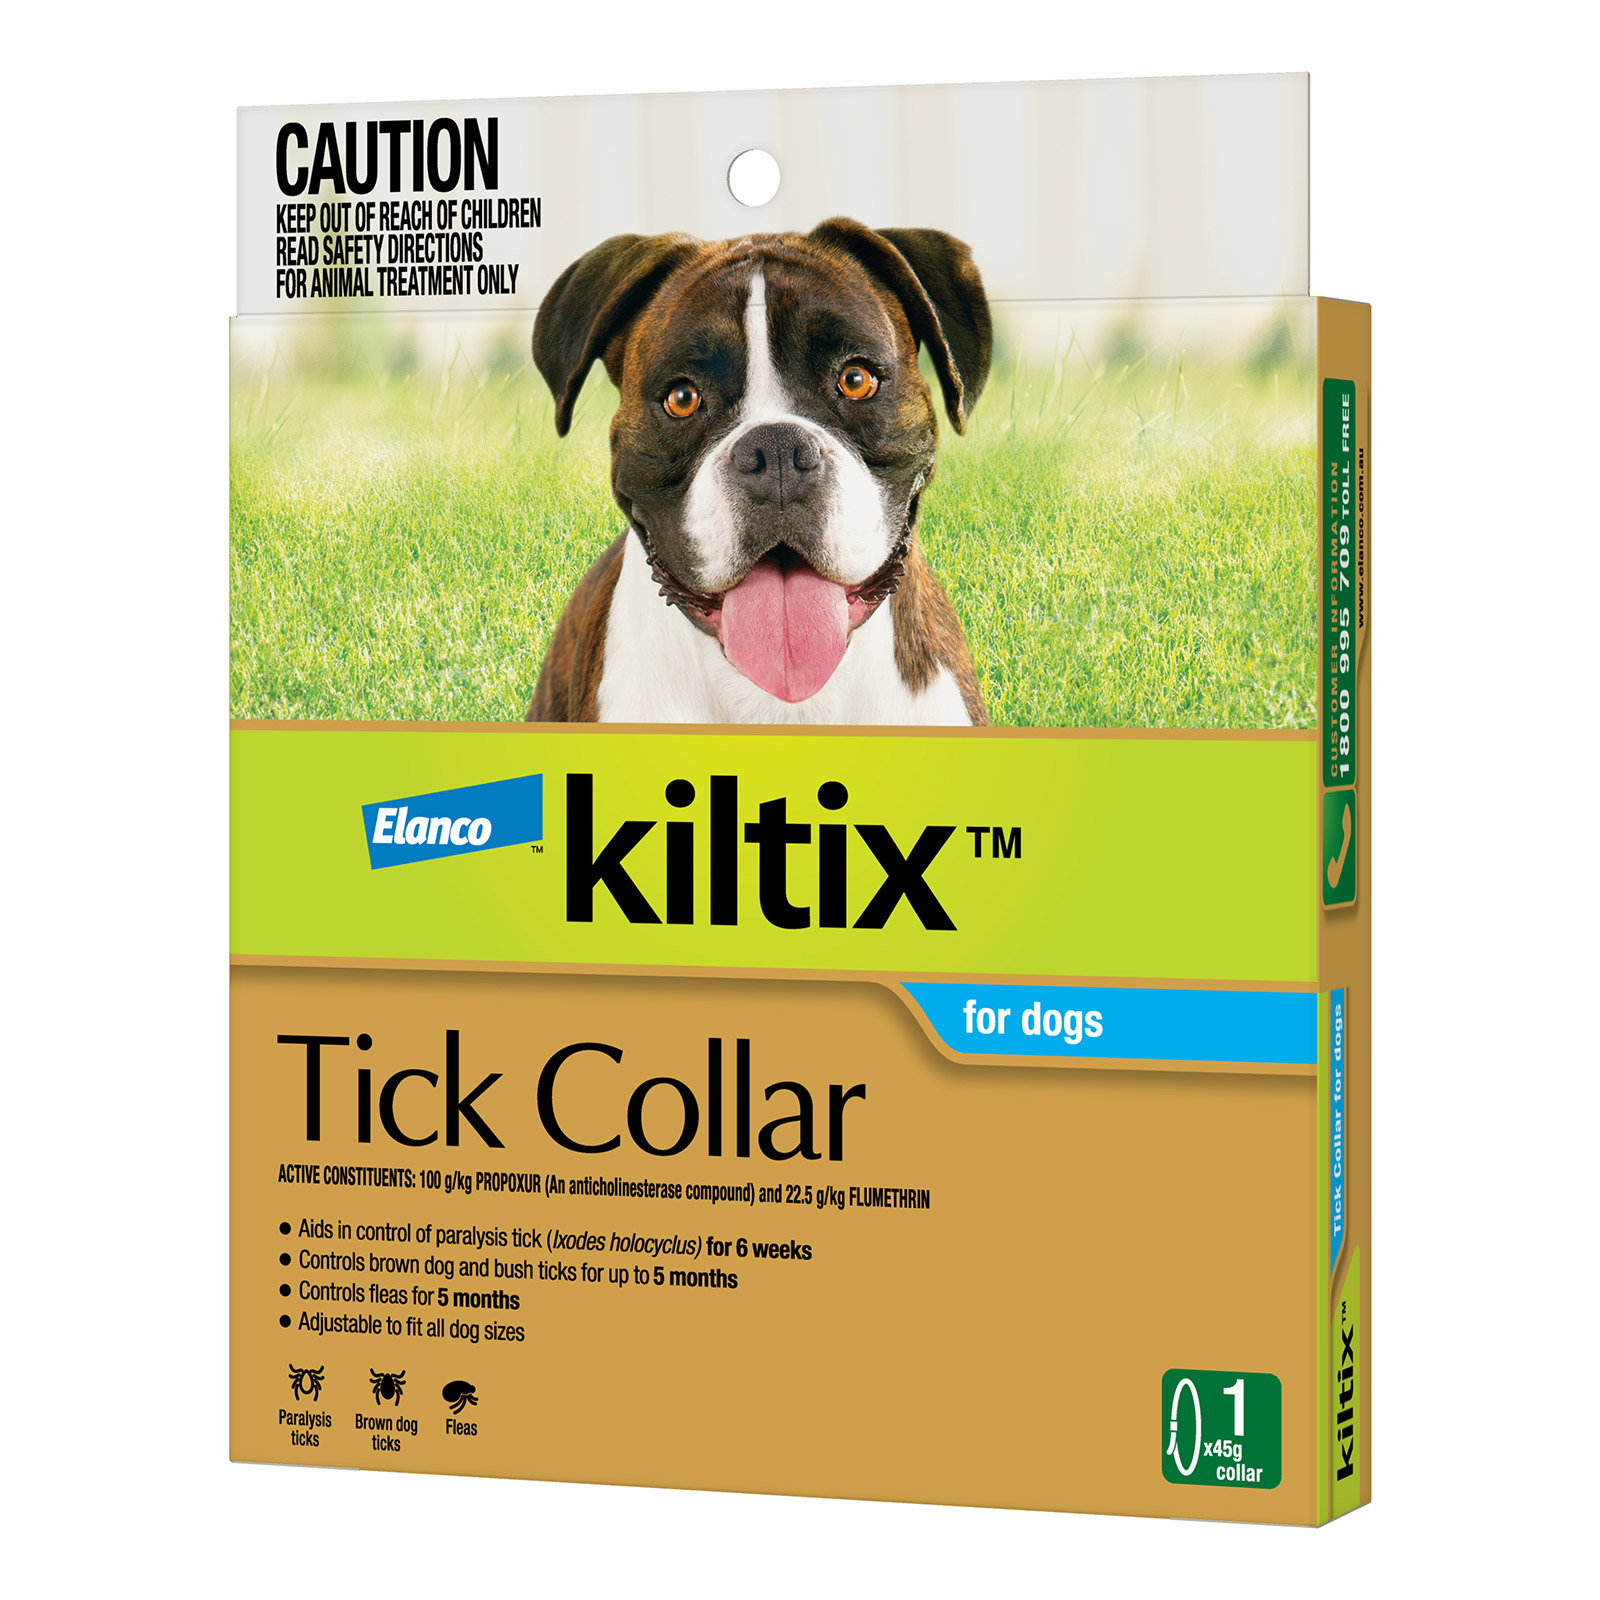 Kiltix Tick Collar for Dogs